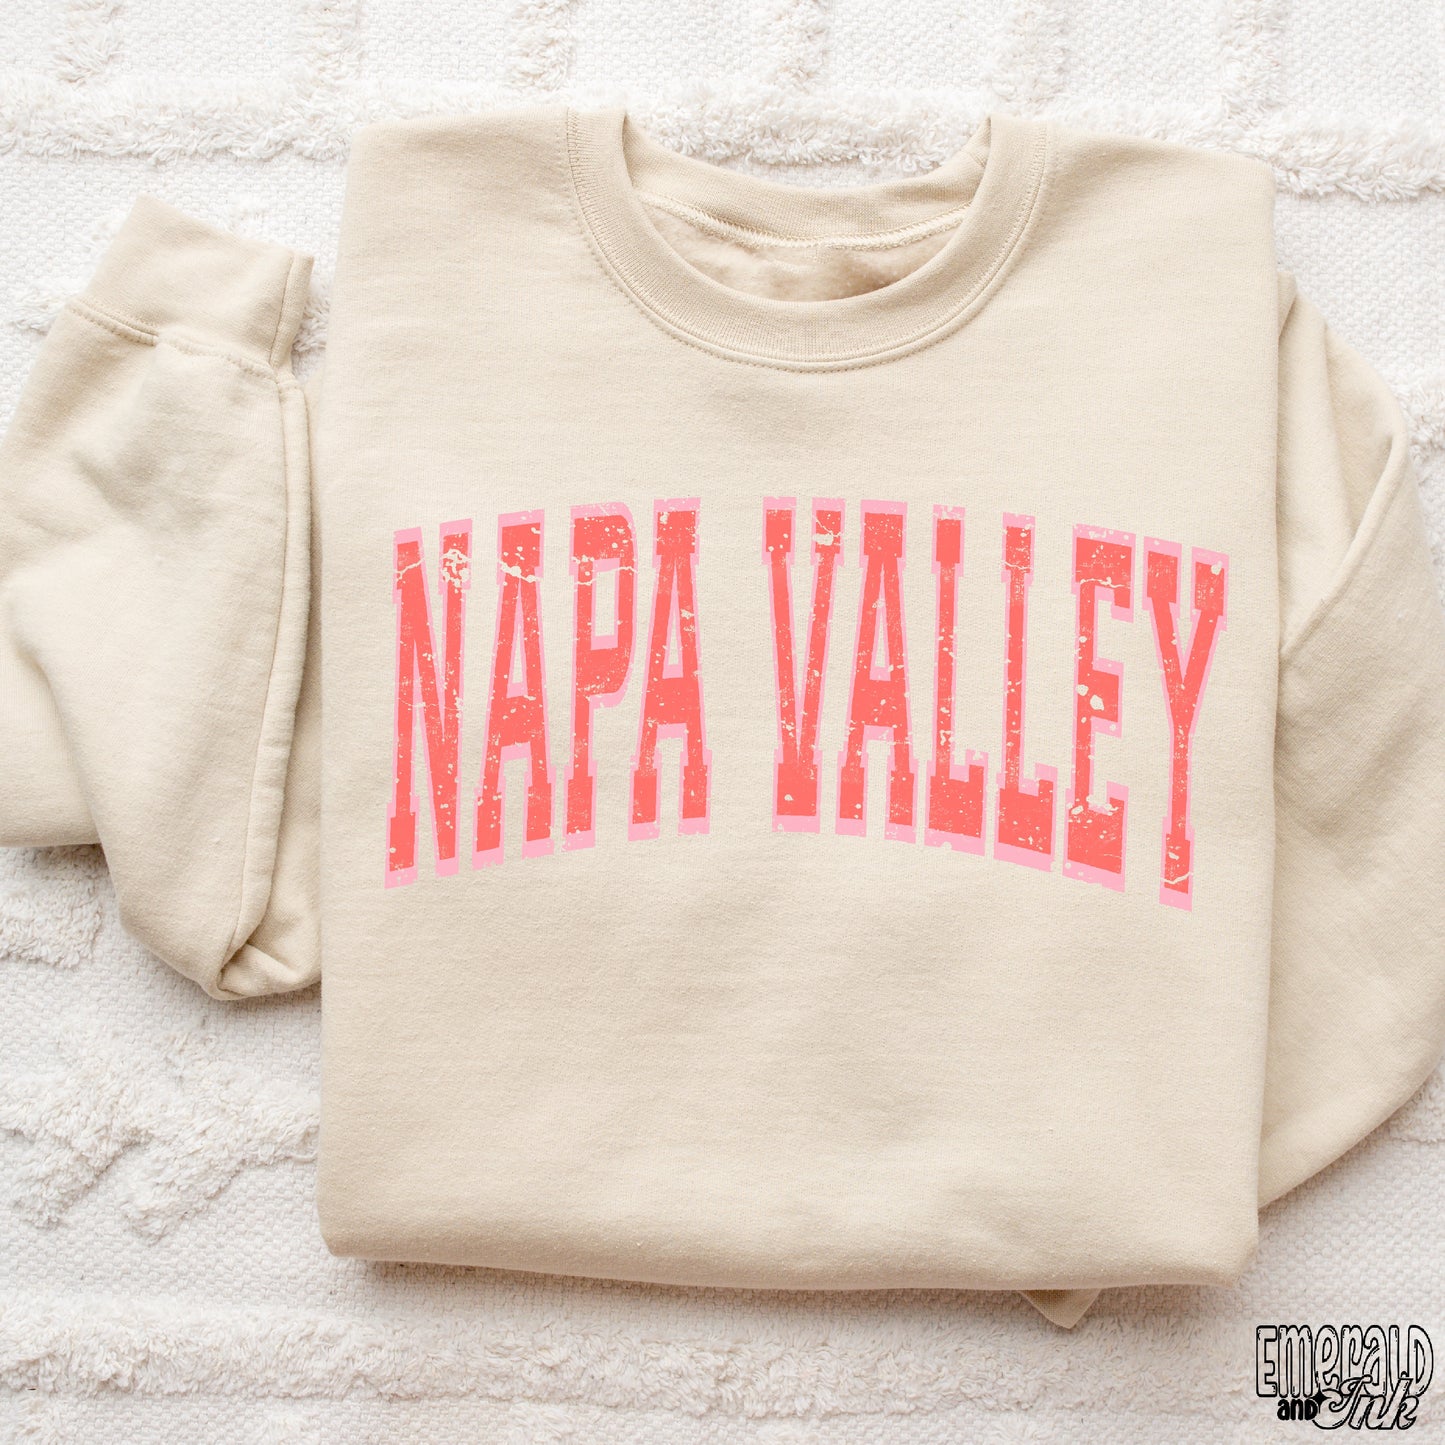 Varsity City - Napa Valley - DTF Transfer